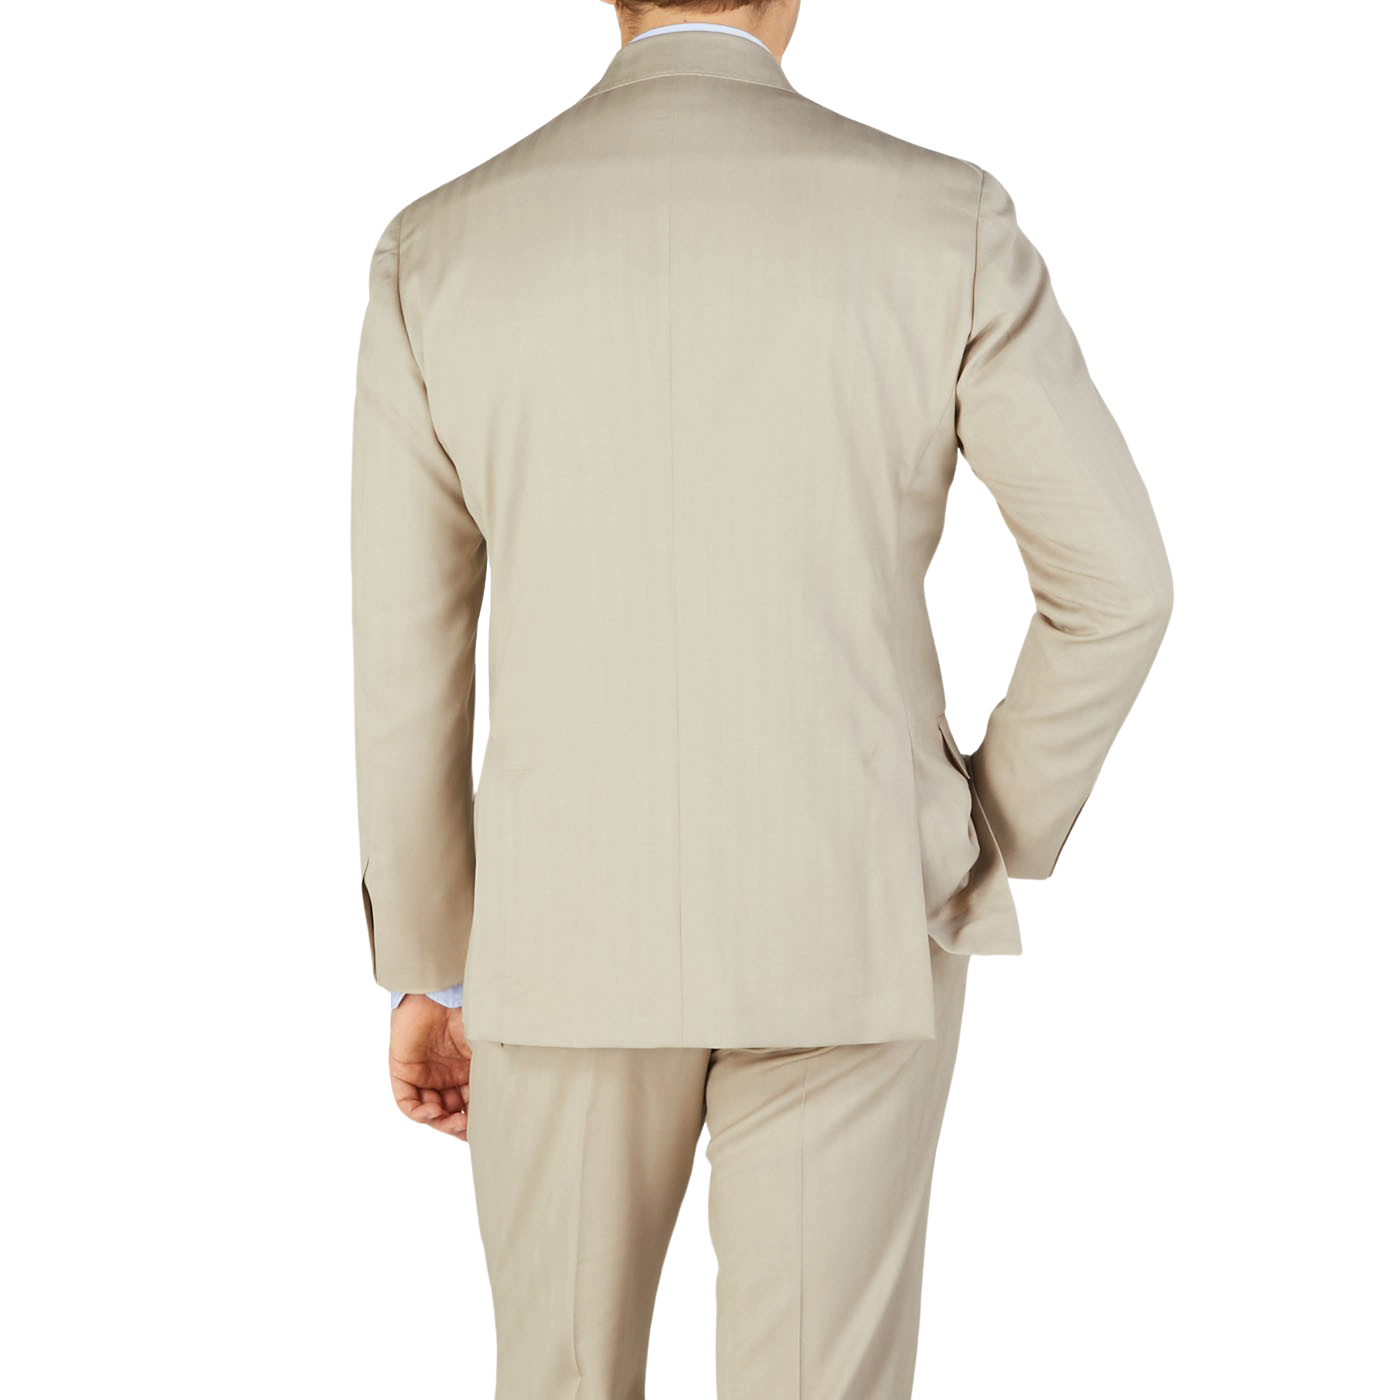 The back view of a man wearing a Ring Jacket Light Beige Herringbone Wool Suit.